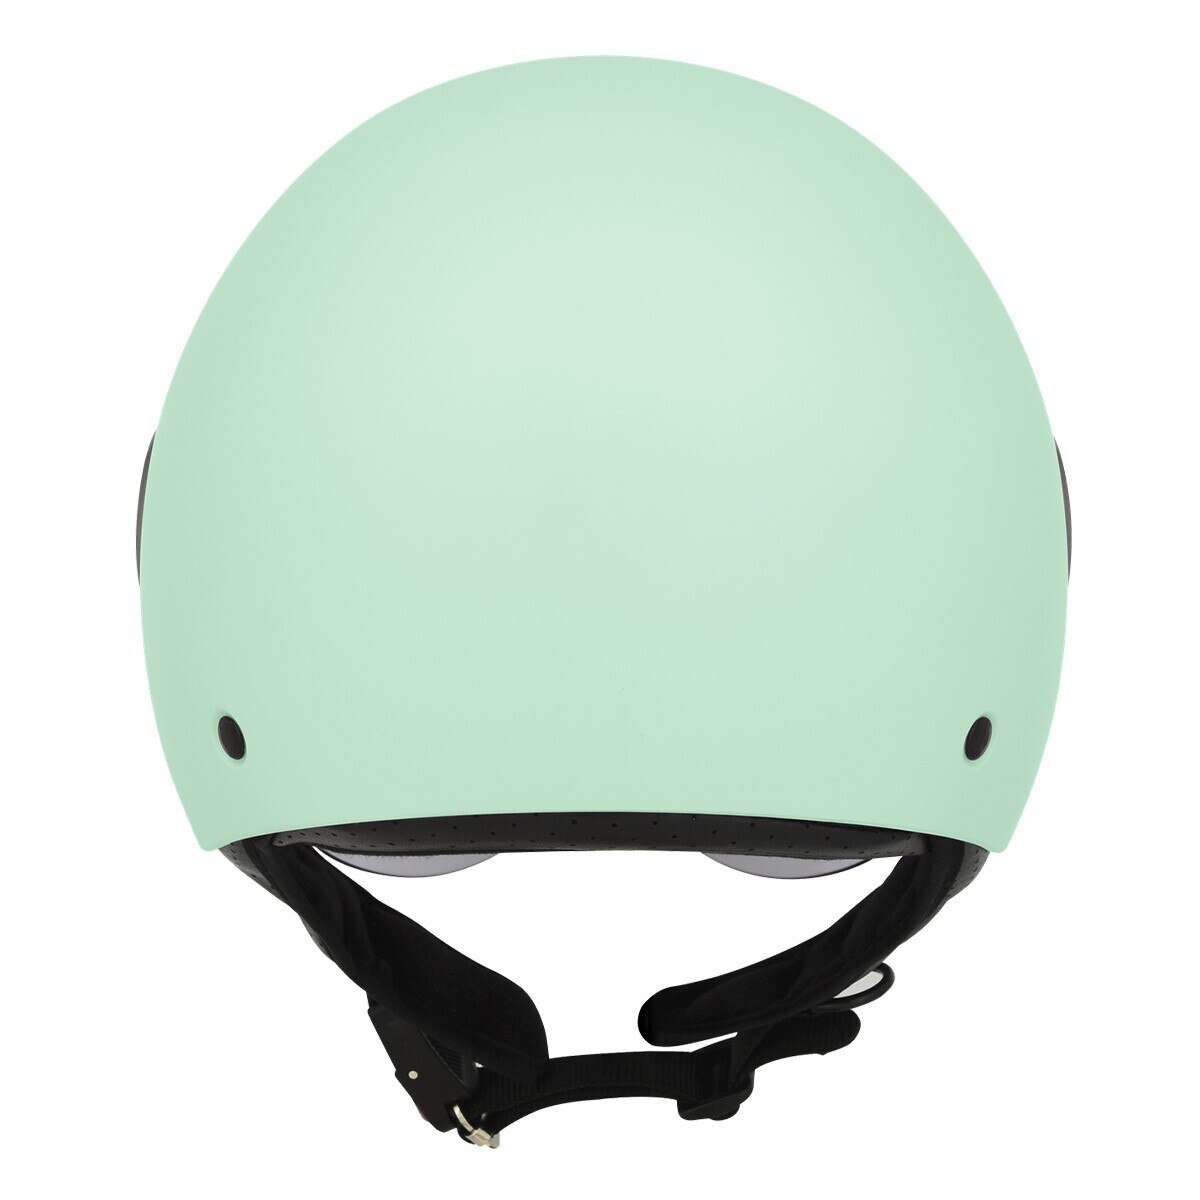 M2R 機車半露臉式防護頭盔 M505 L 消光粉綠